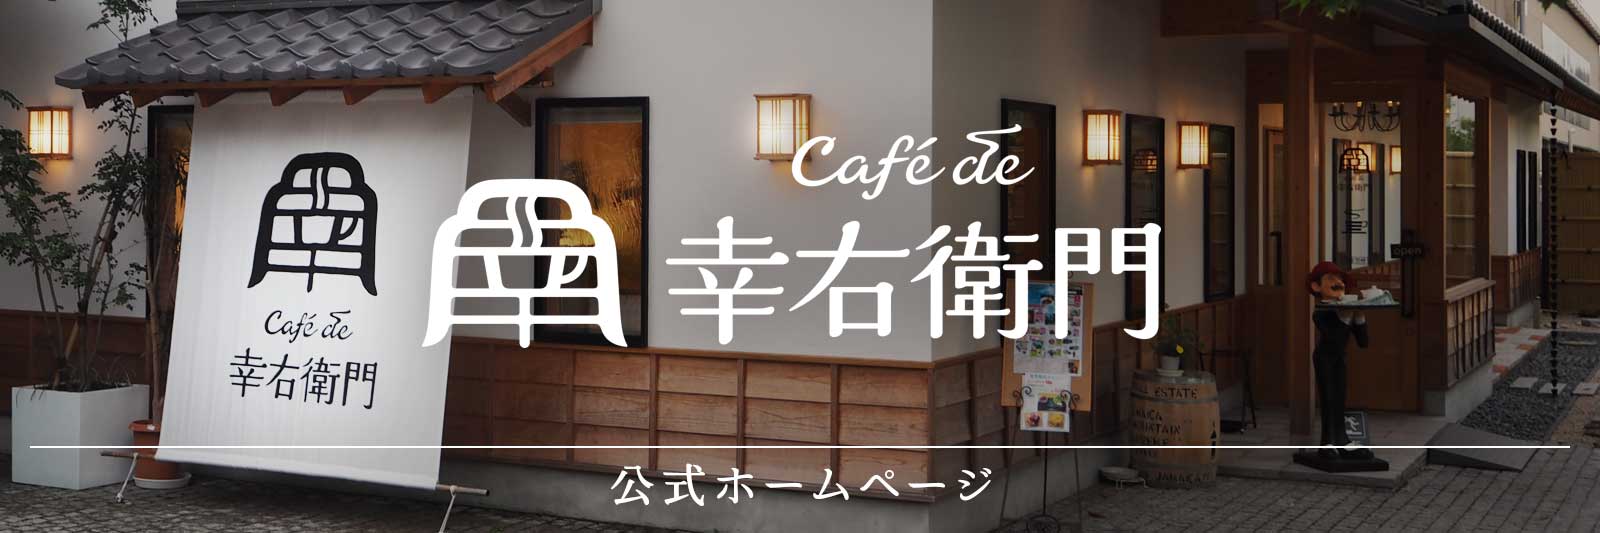 Café de 幸右衛門ホームページ